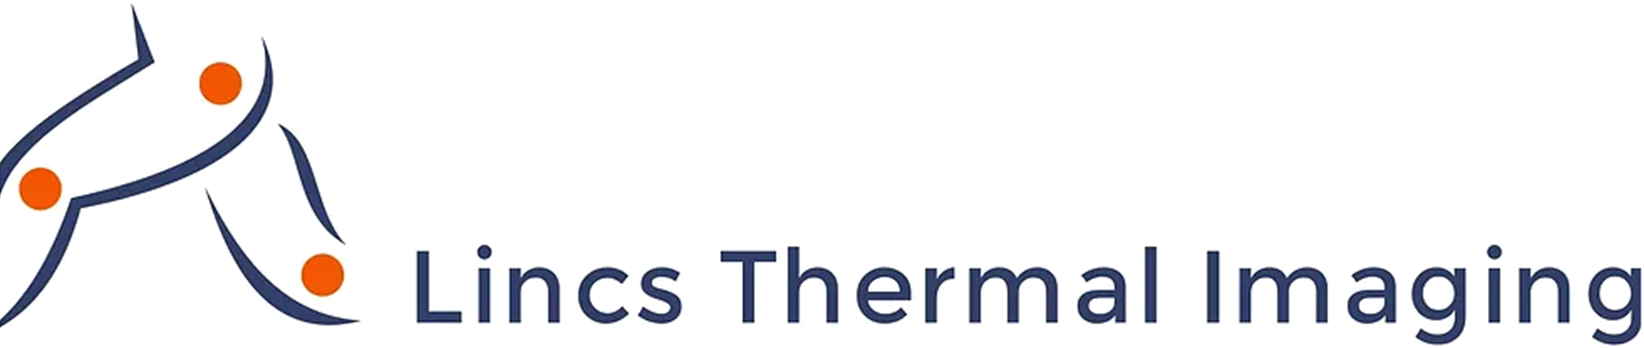 Lincs Thermal Imaging Logo